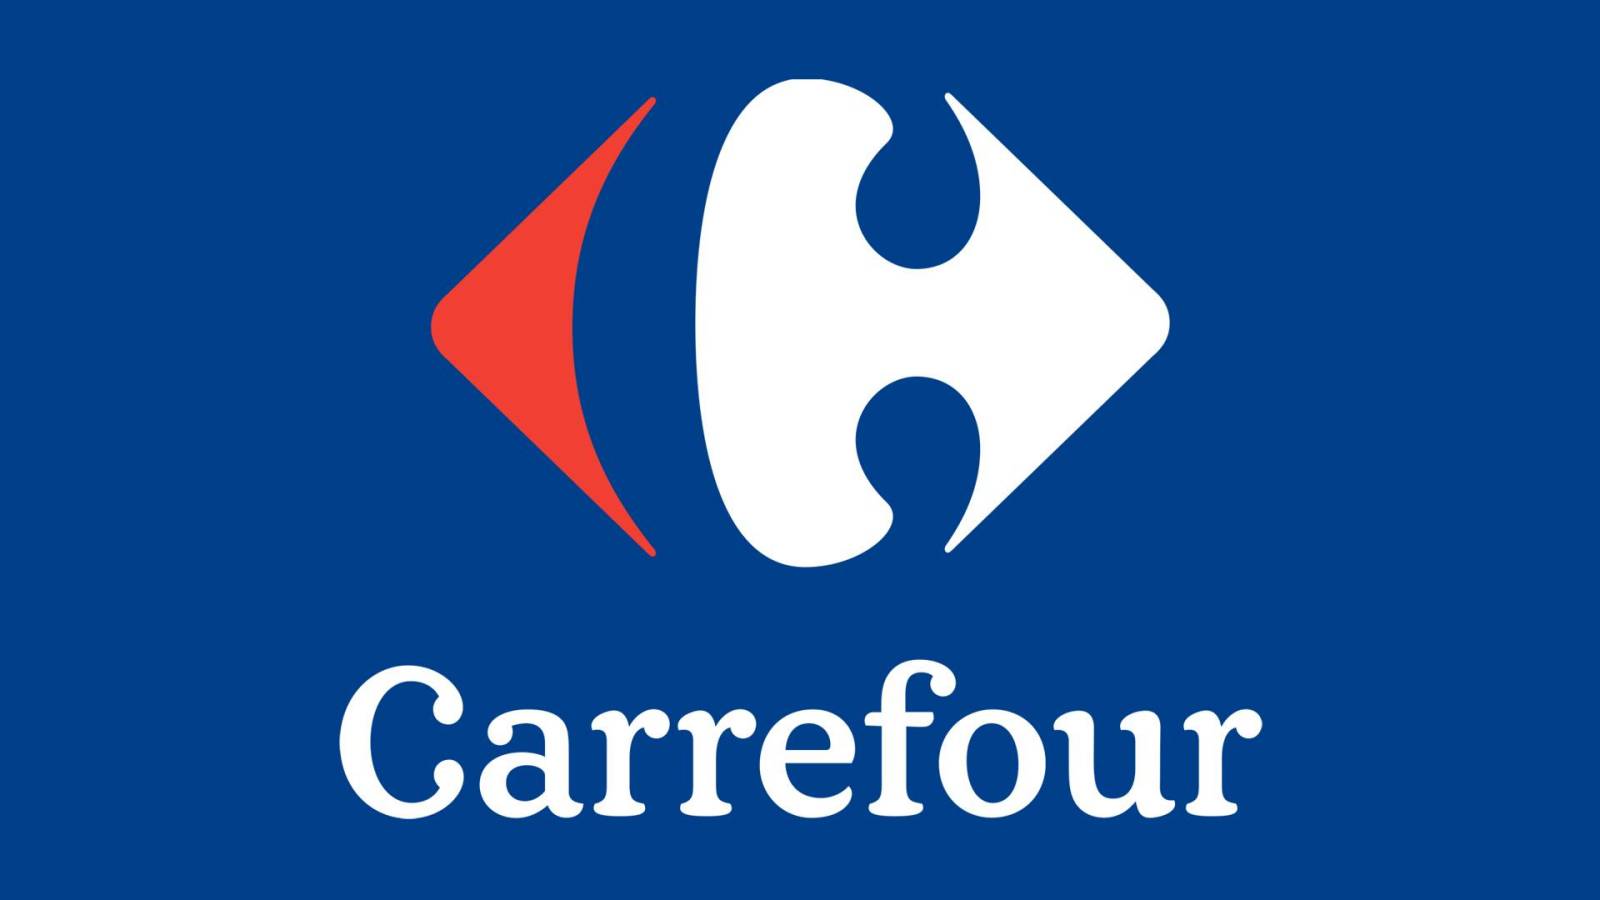 Carrefour important